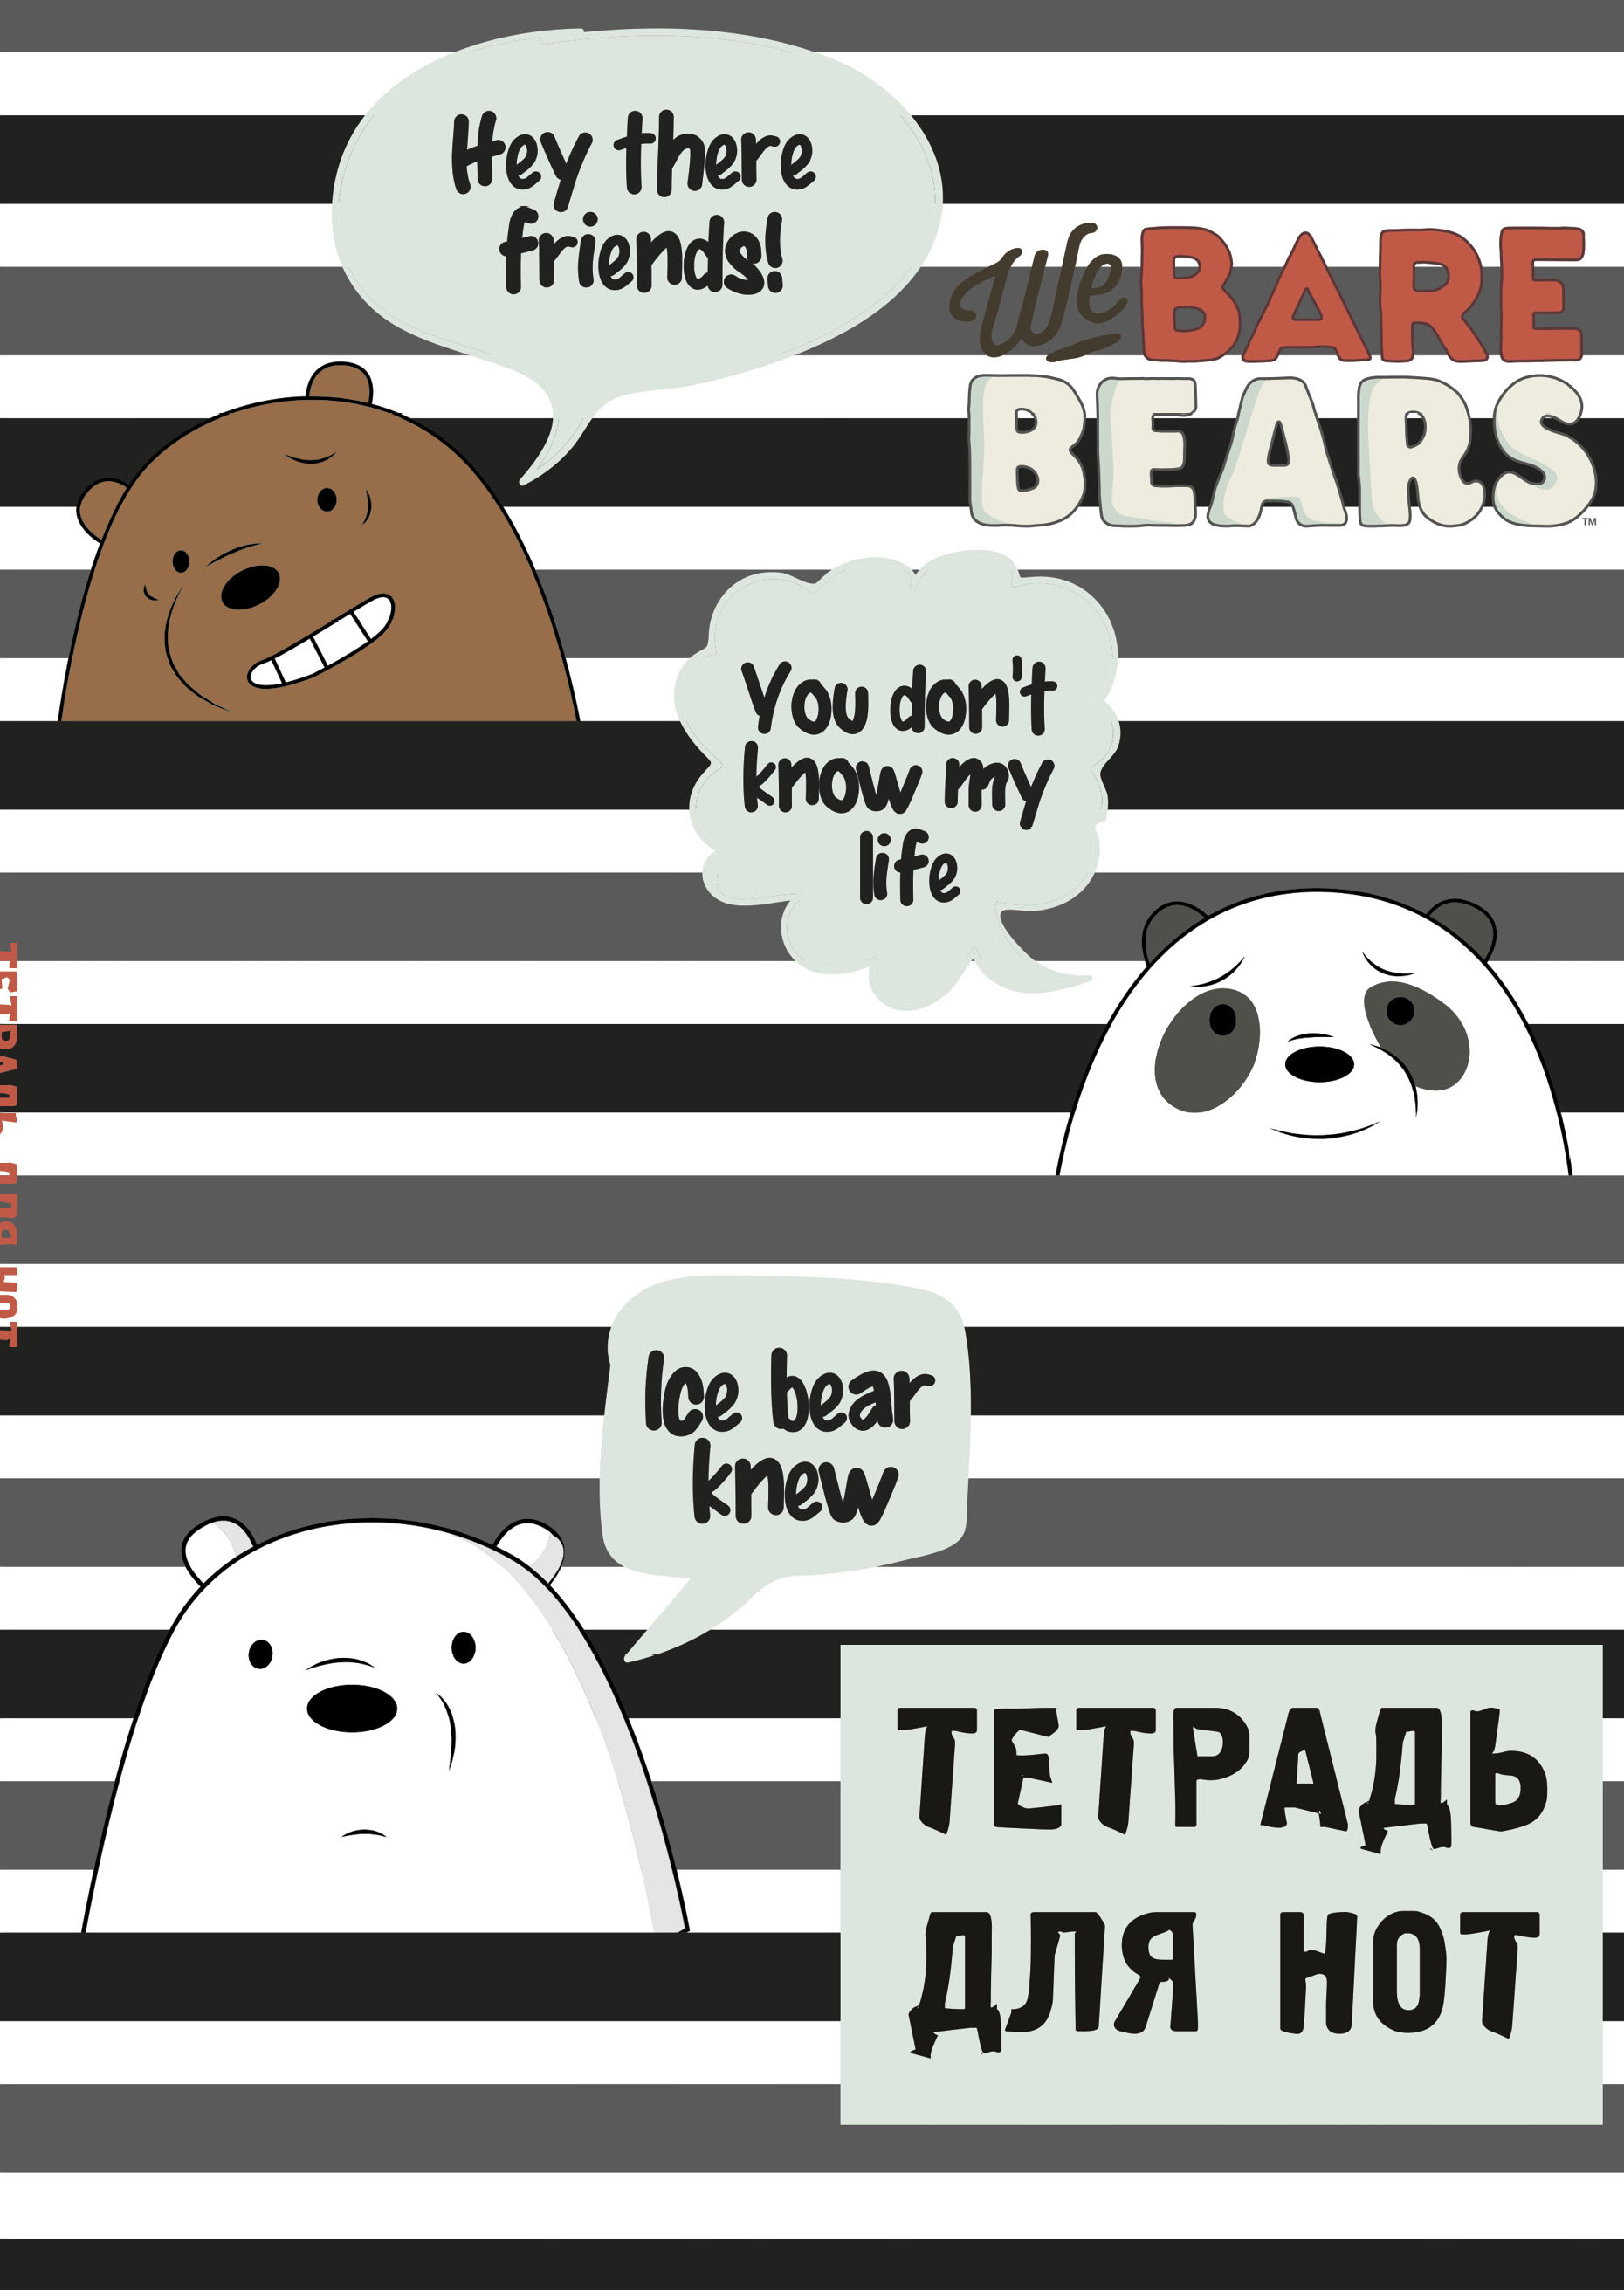   . We bare bears (12 ., 4, , )